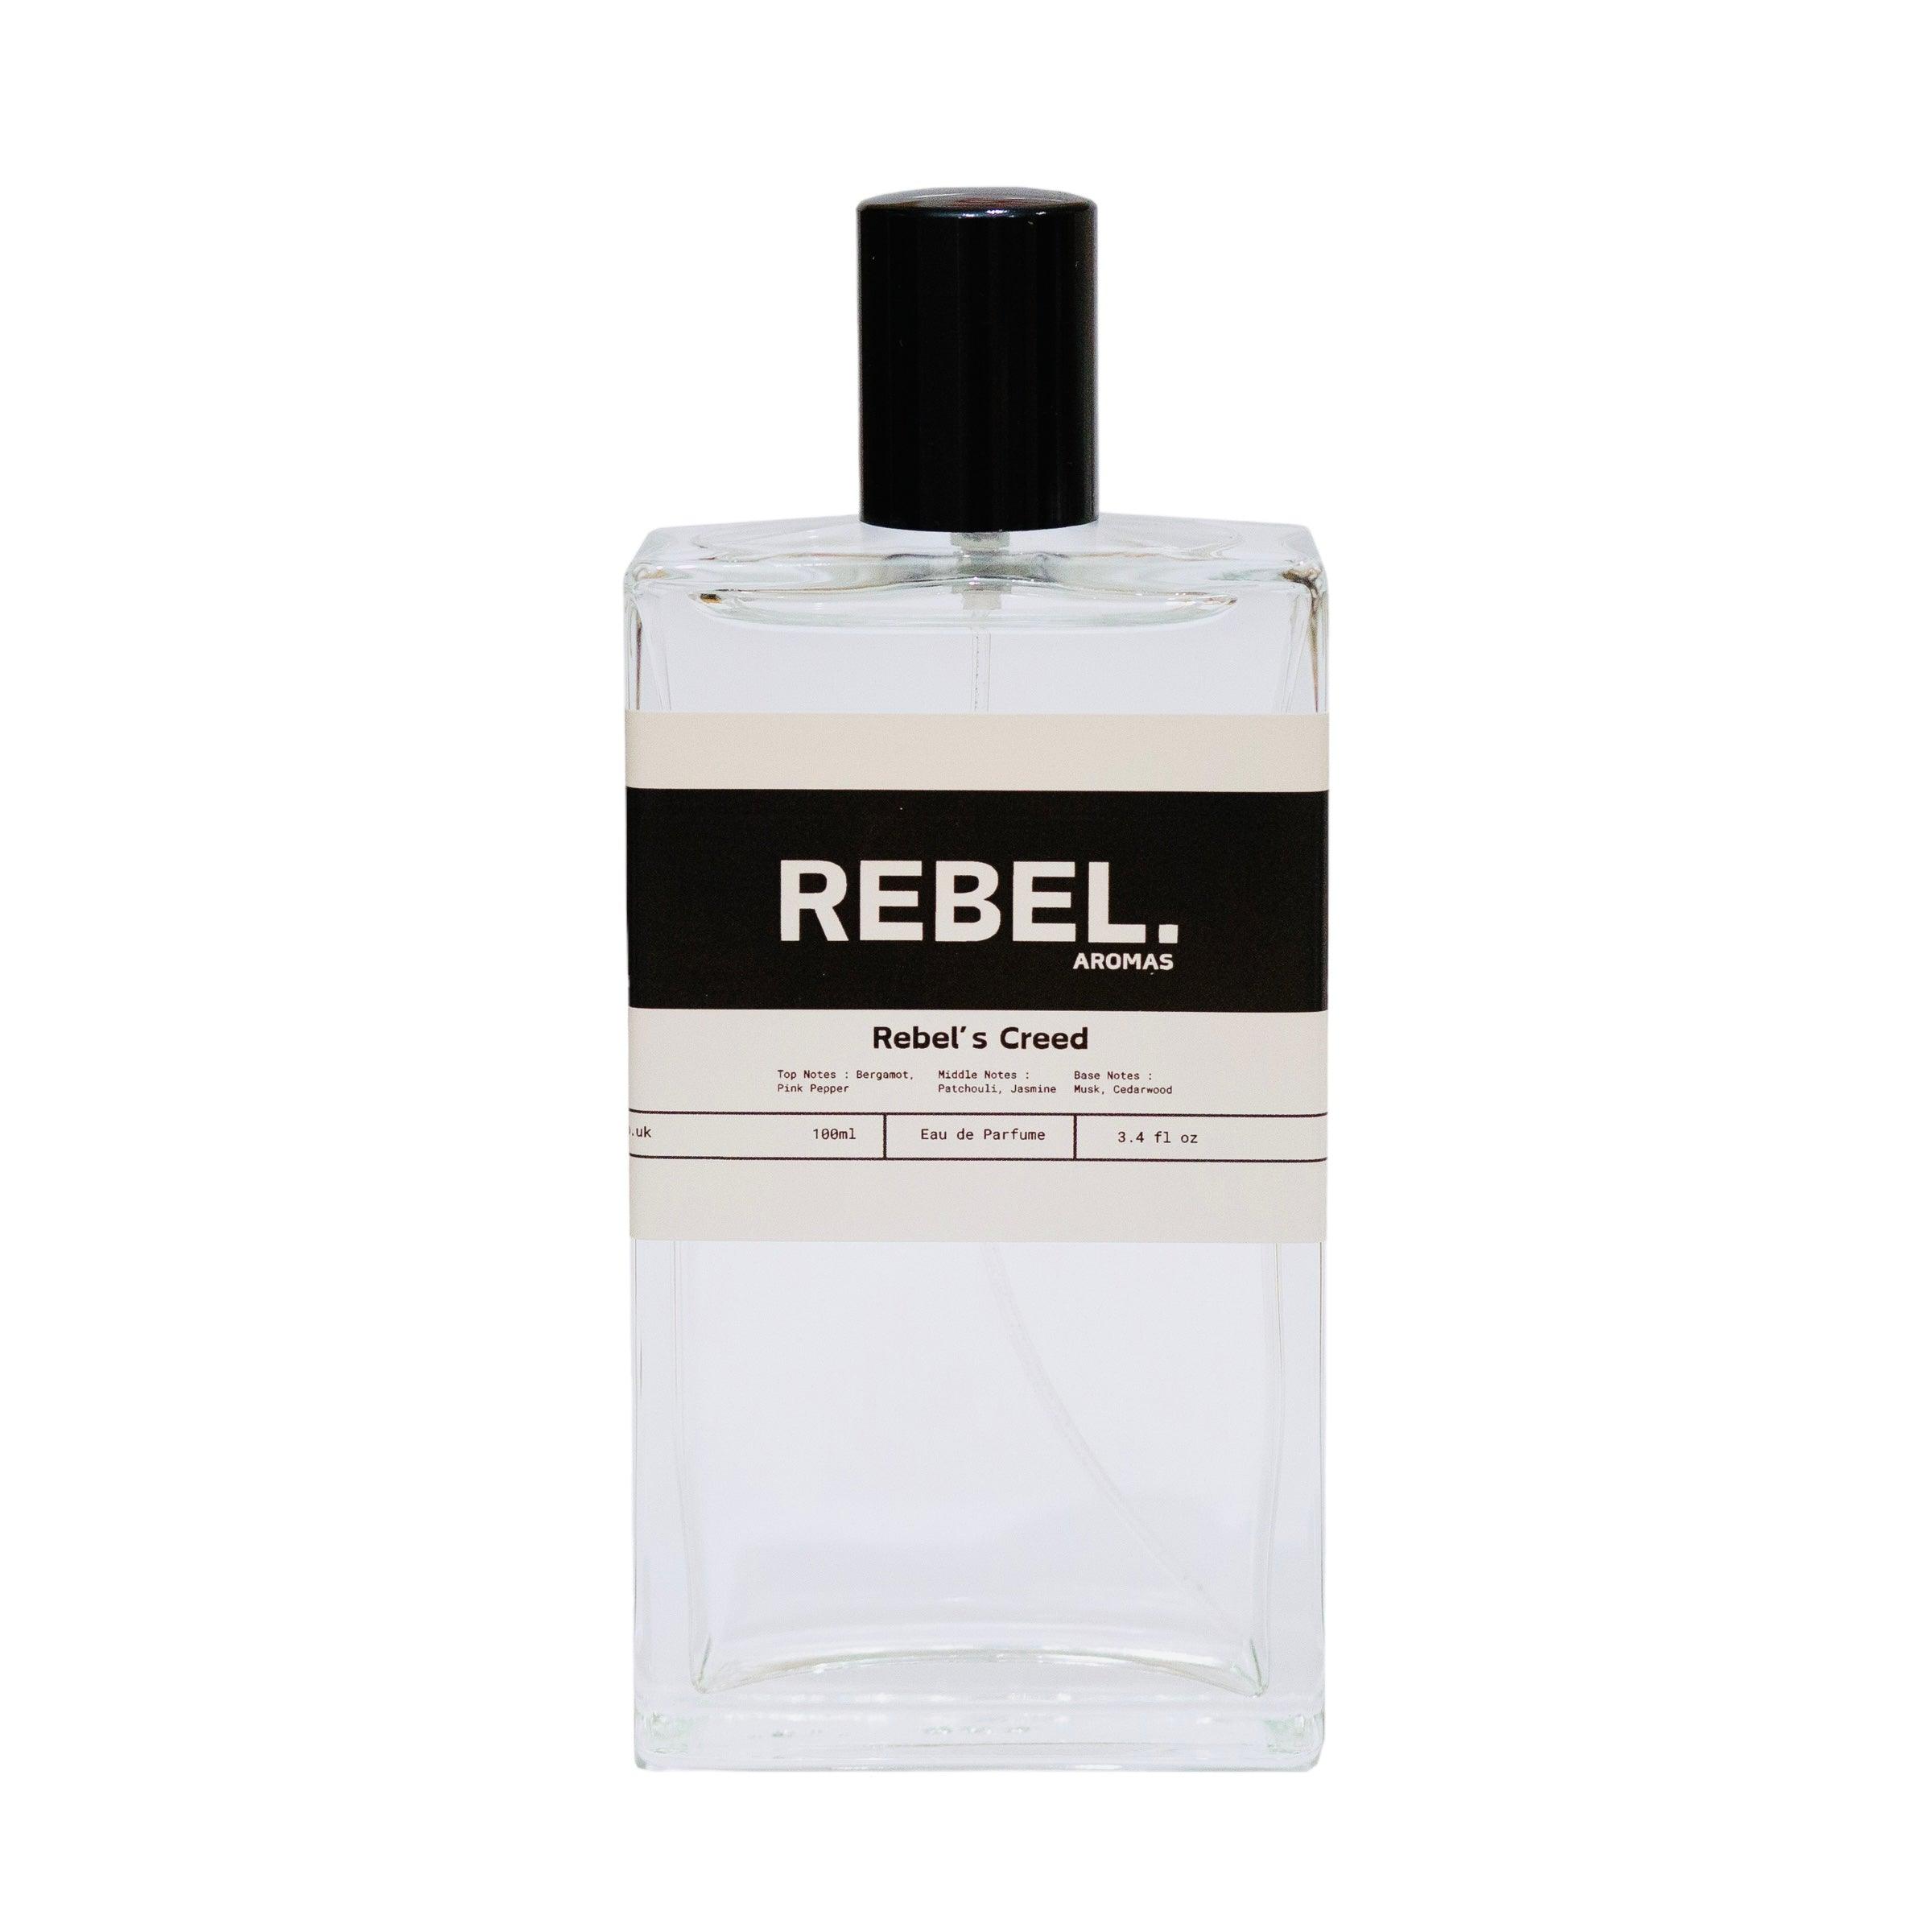 Rebels Creed - Rebel Aromas